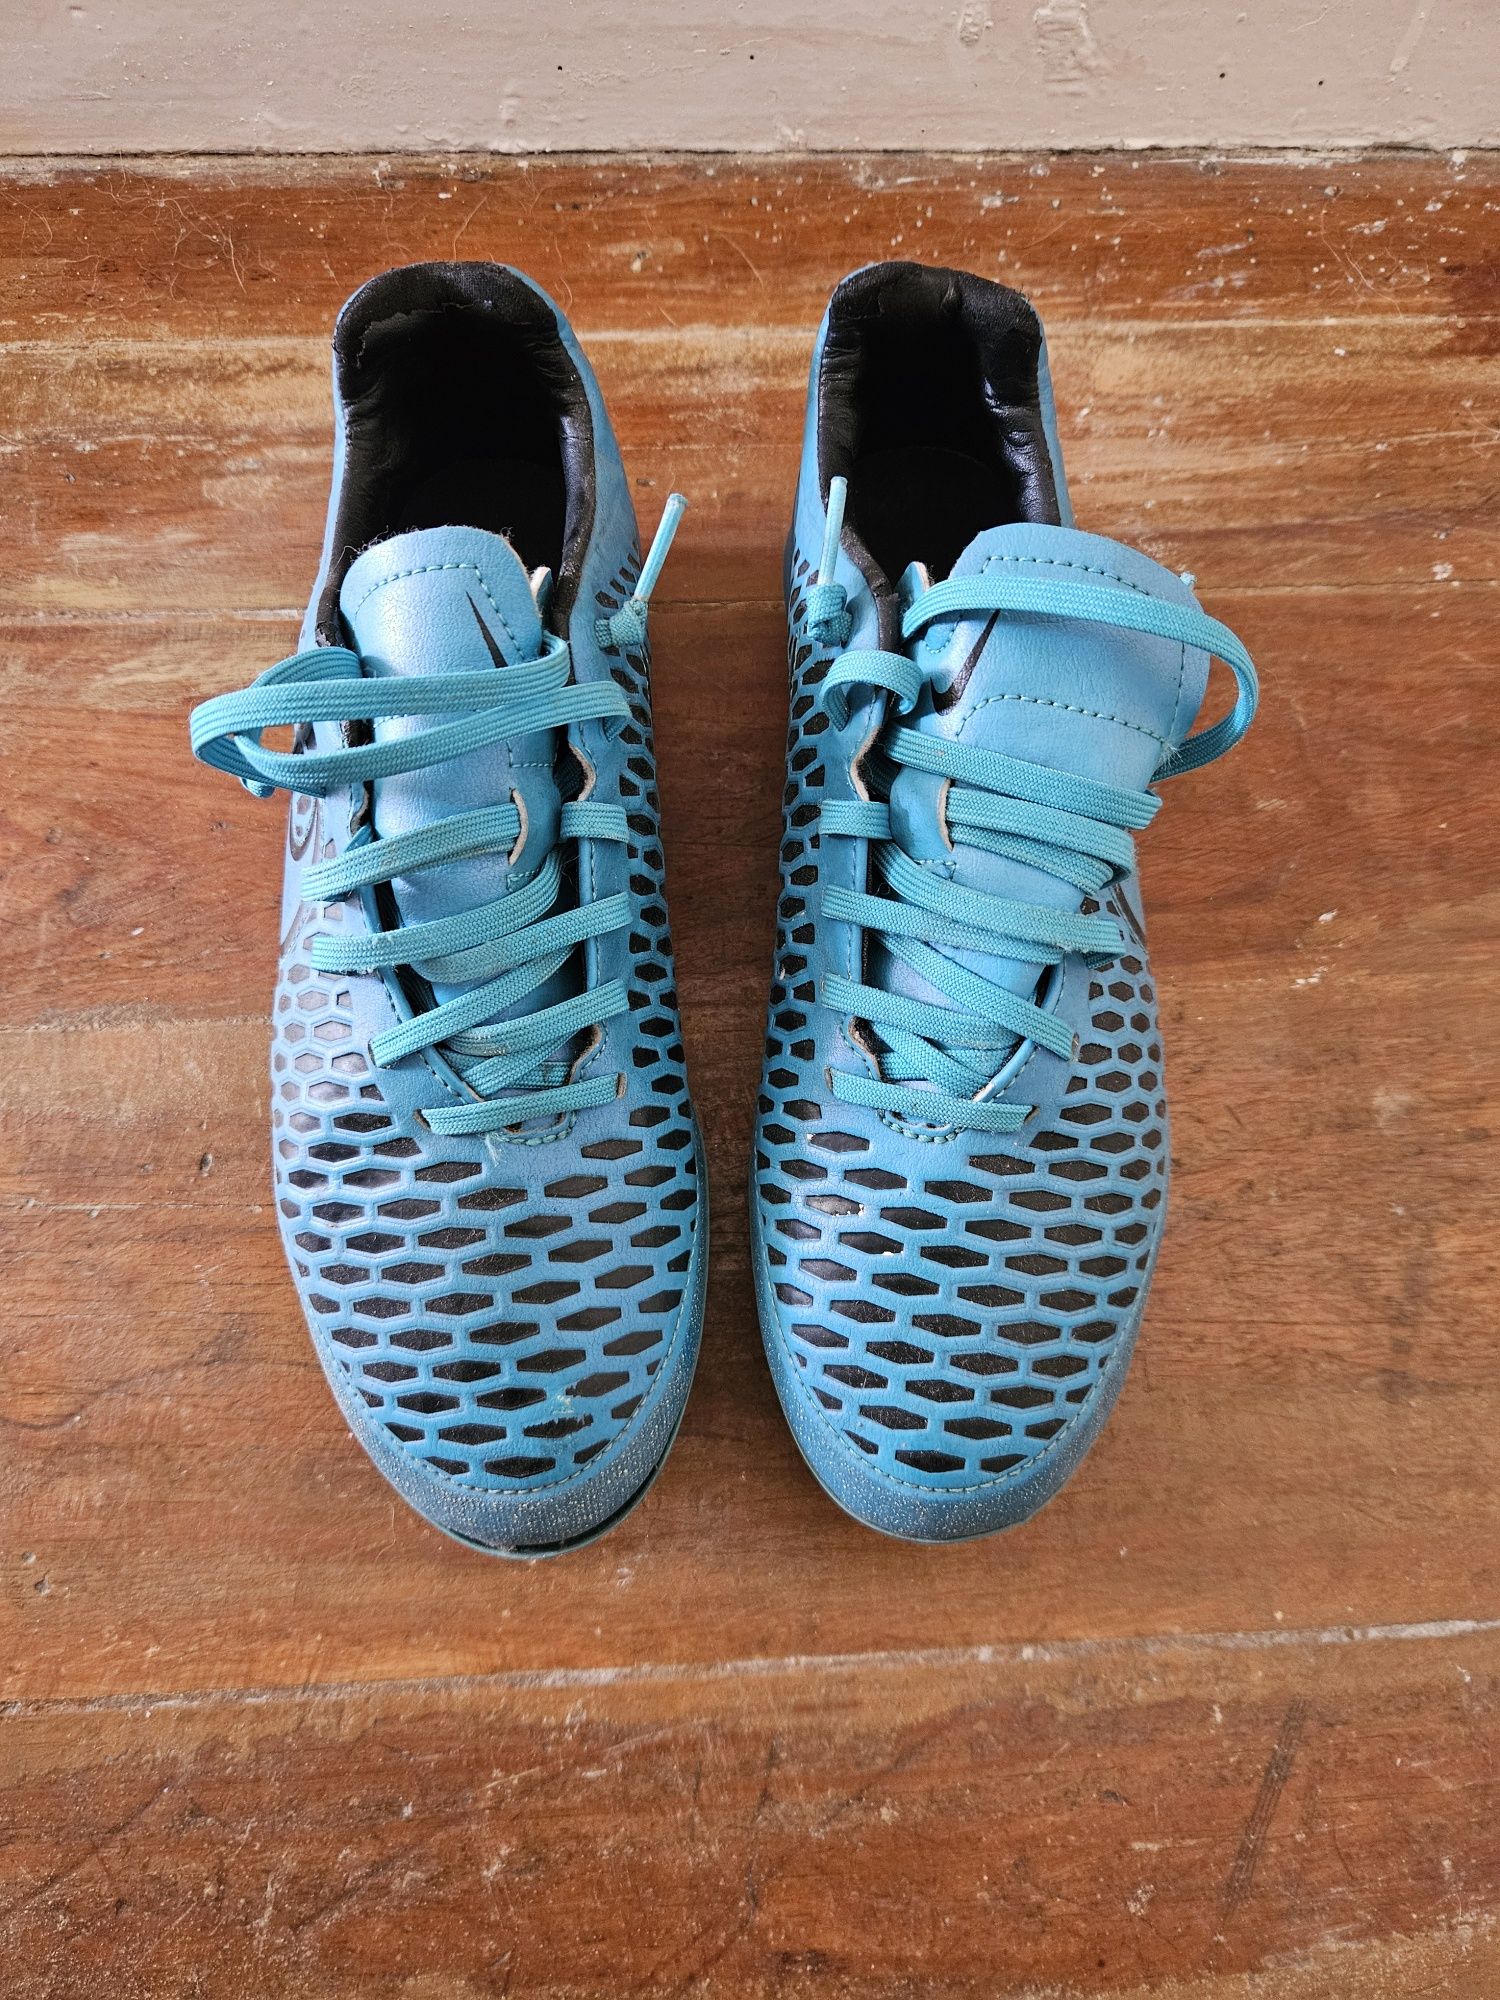 Chuteira/Bota Nike Tam.: 40 relvado sintético